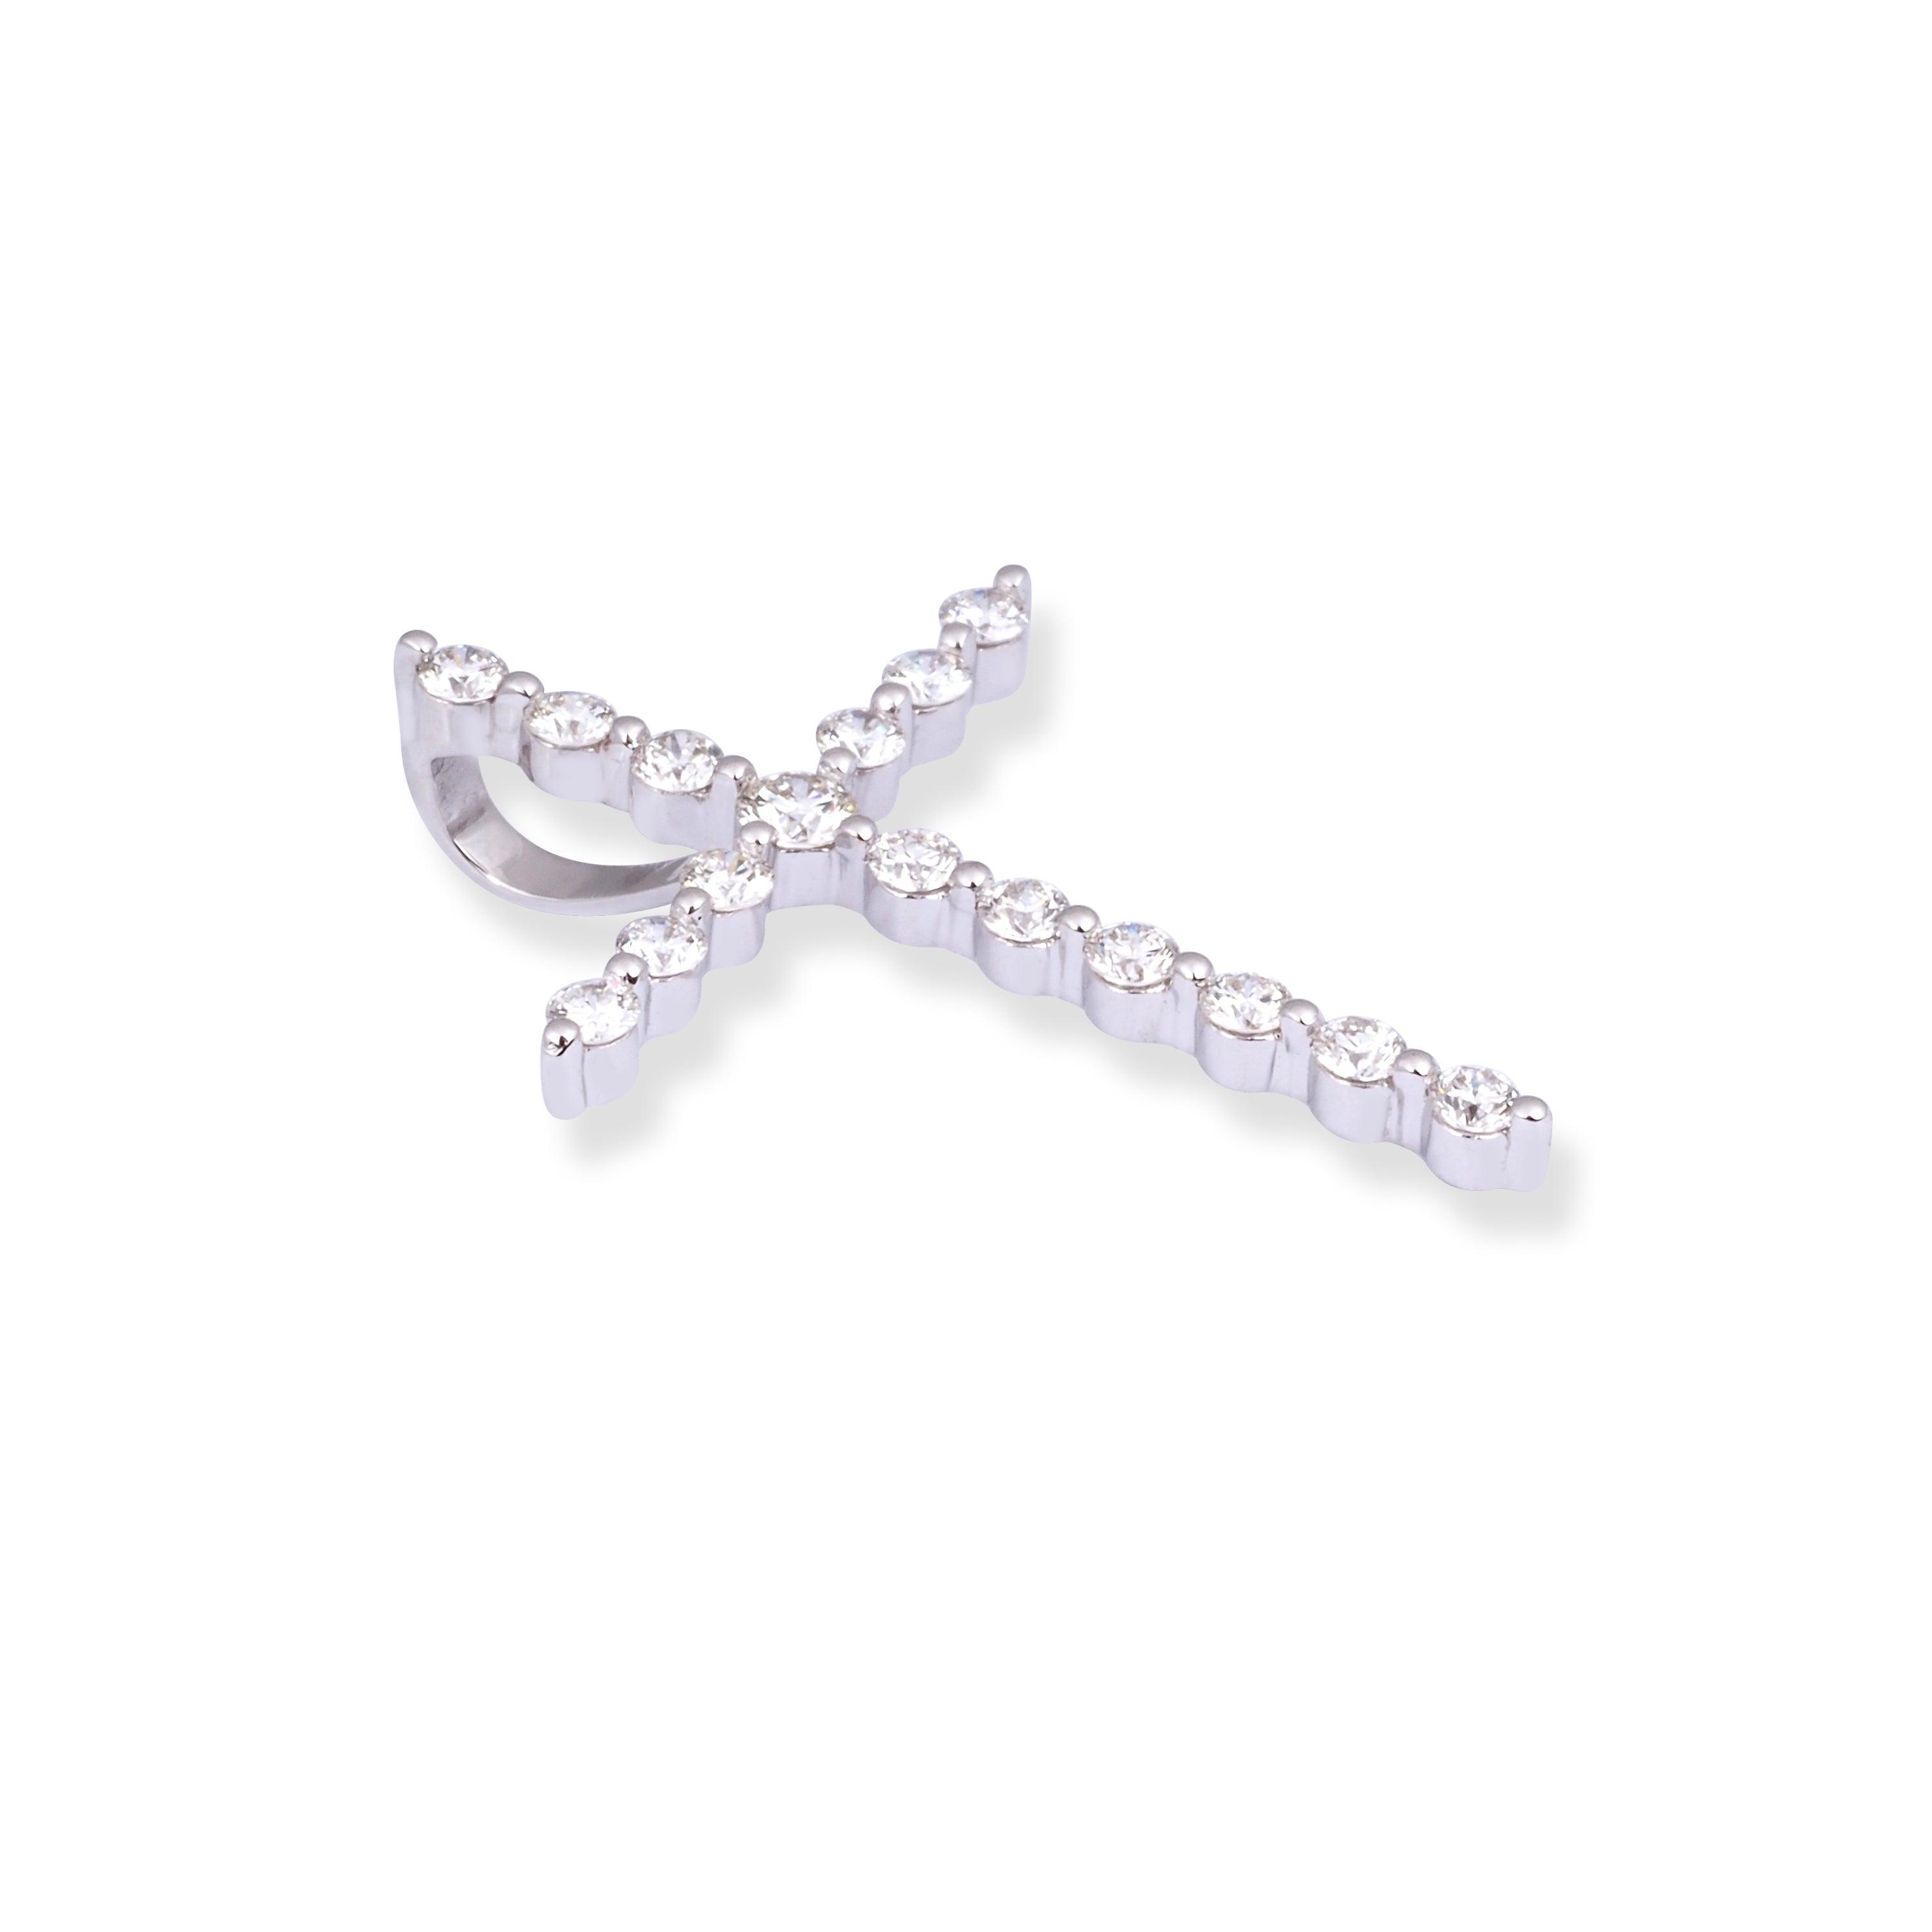 18ct White Gold Diamond Cross Pendant P-7967 - Minar Jewellers